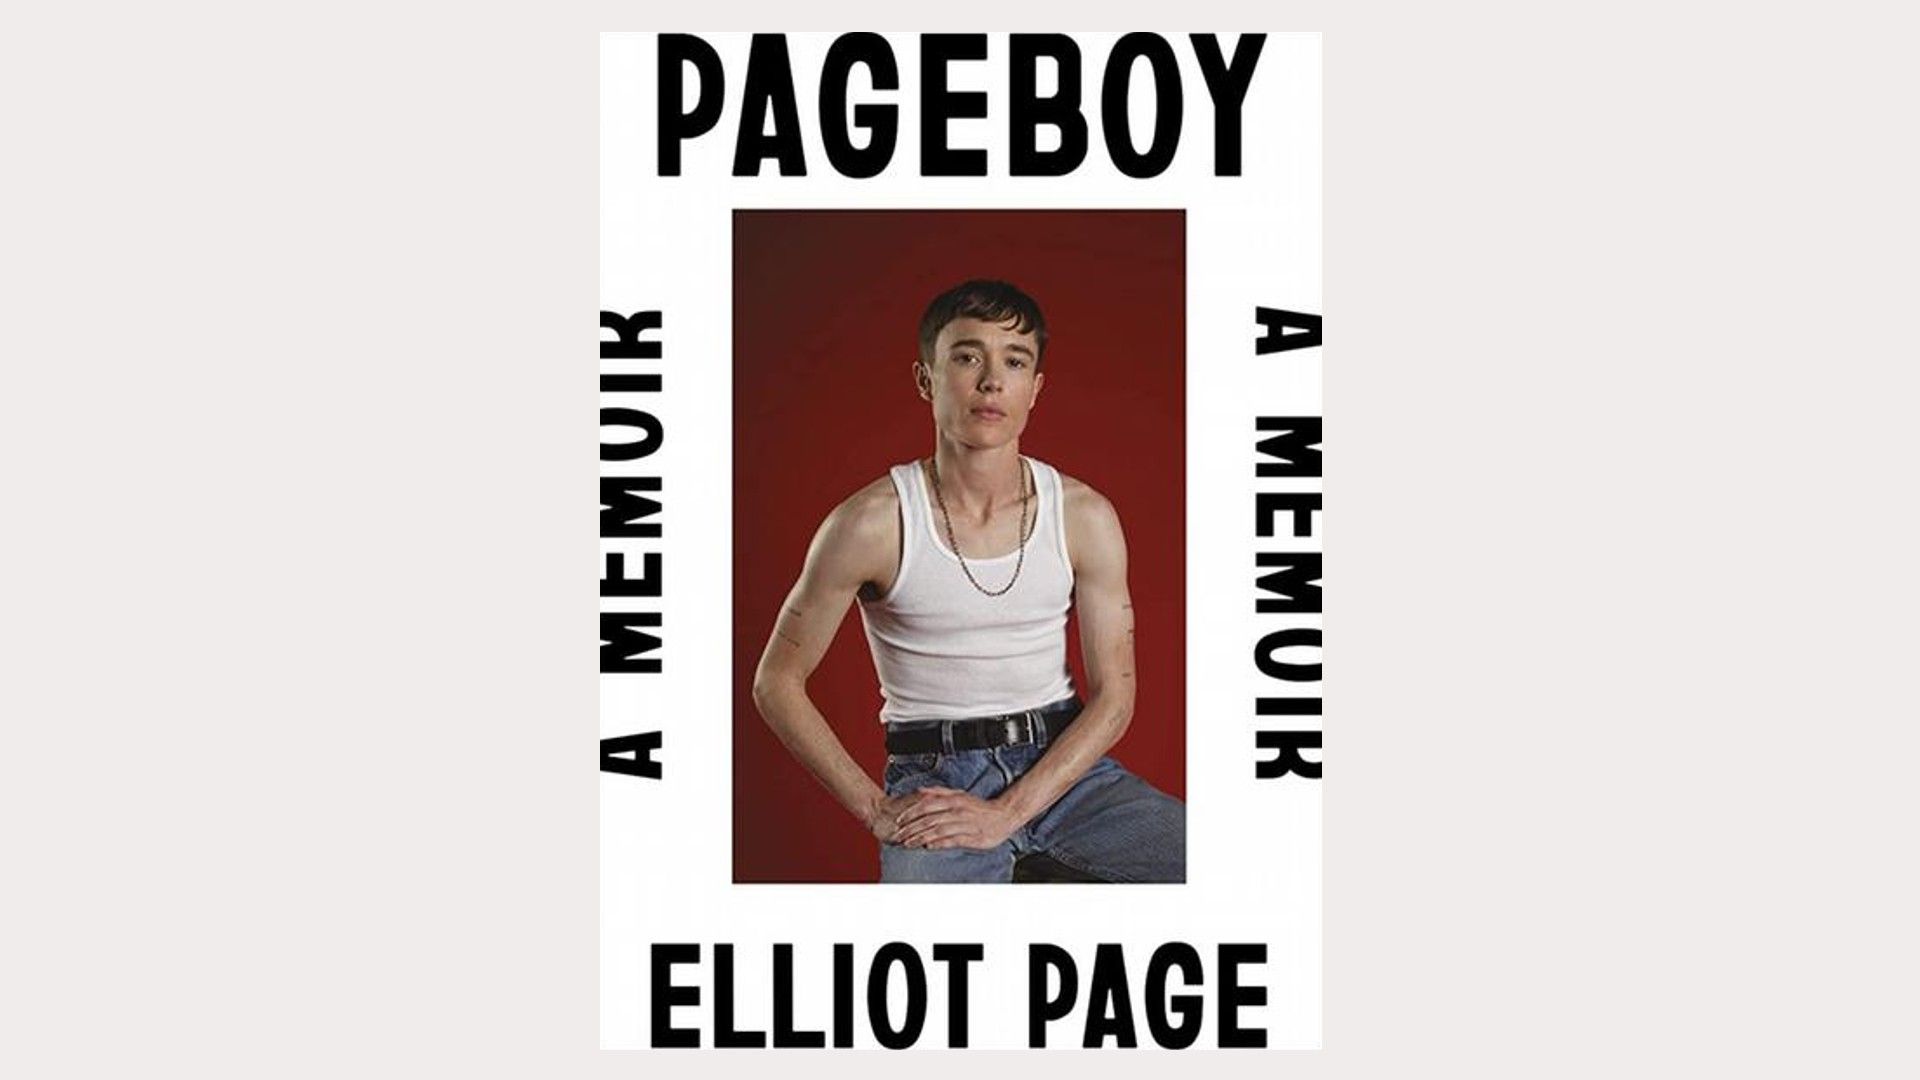 Pageboy – Elliot Page's candid memoir